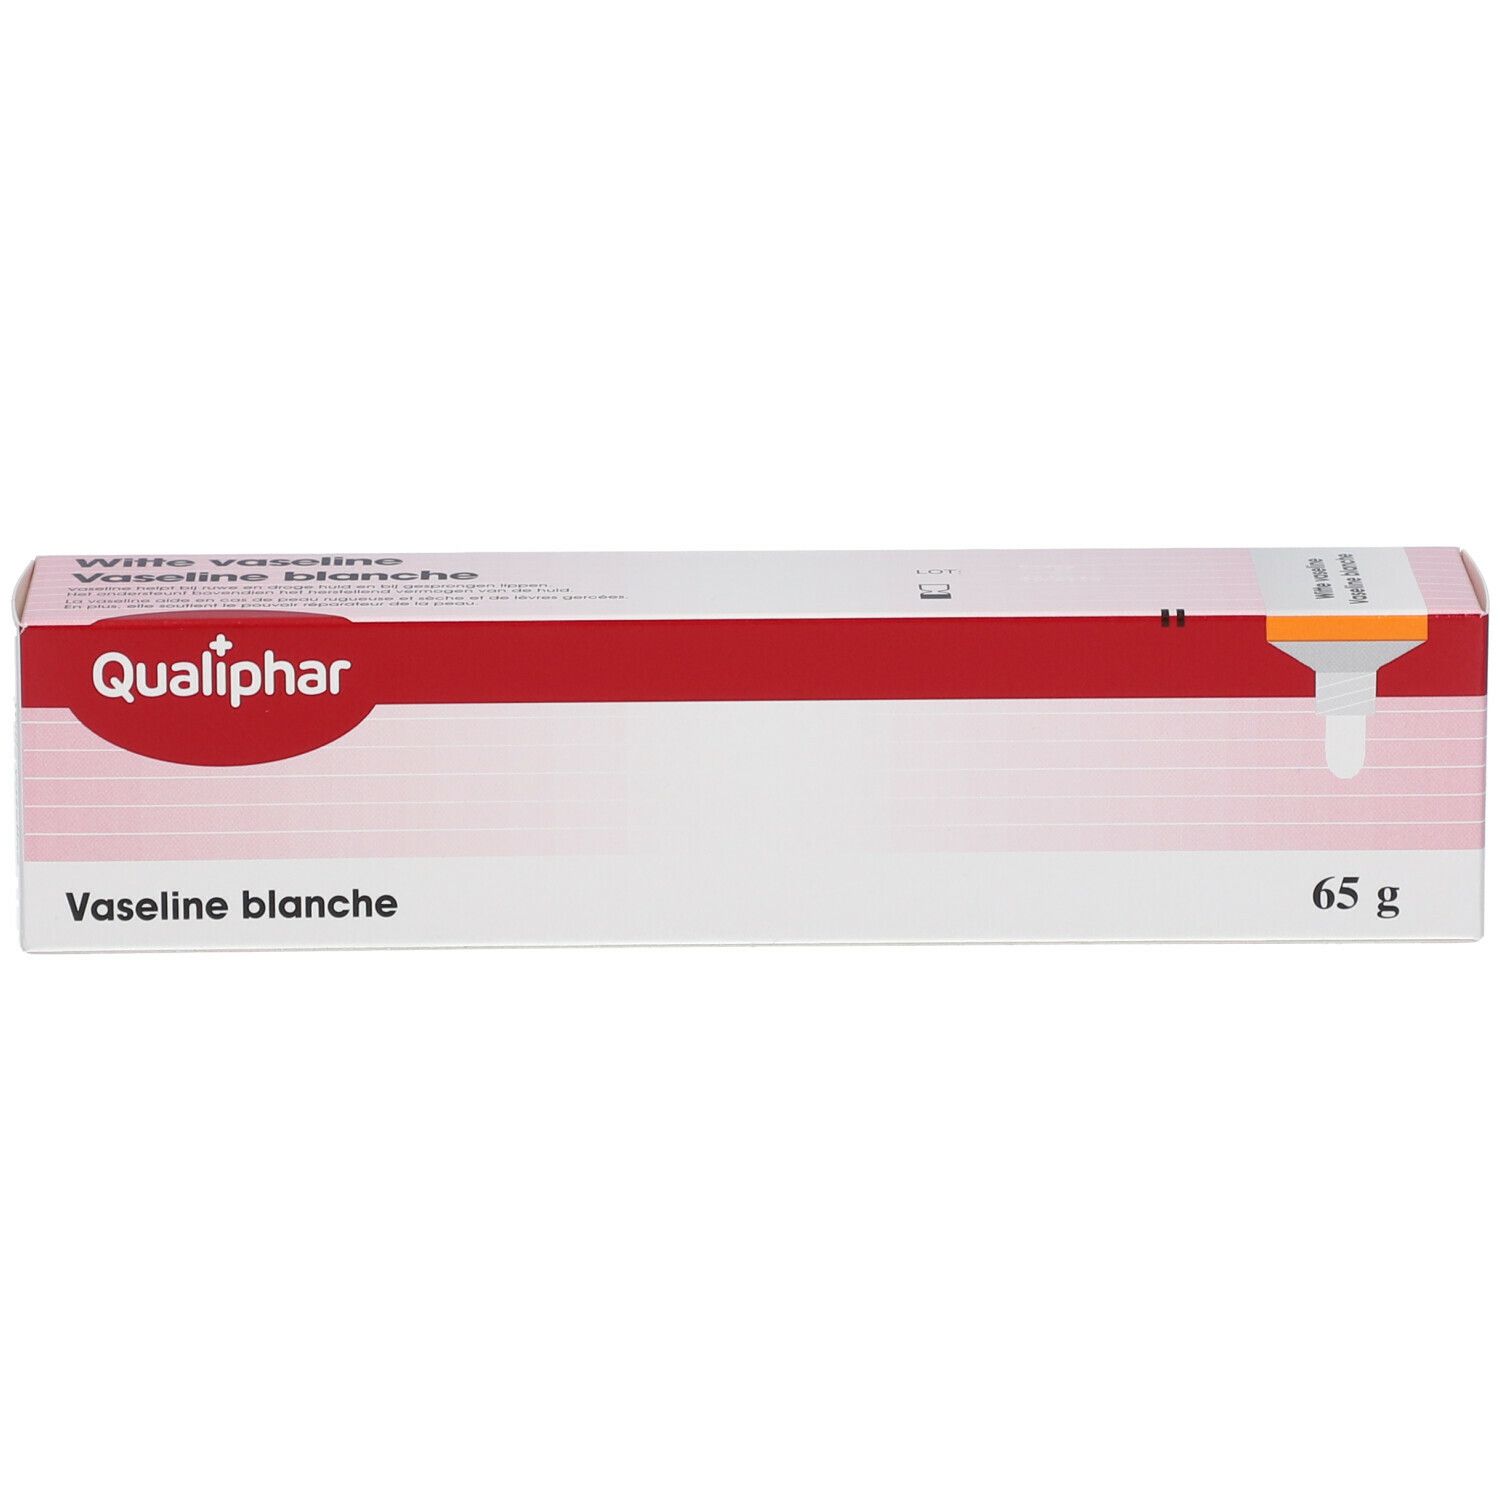 Qualiphar Vaseline blanche